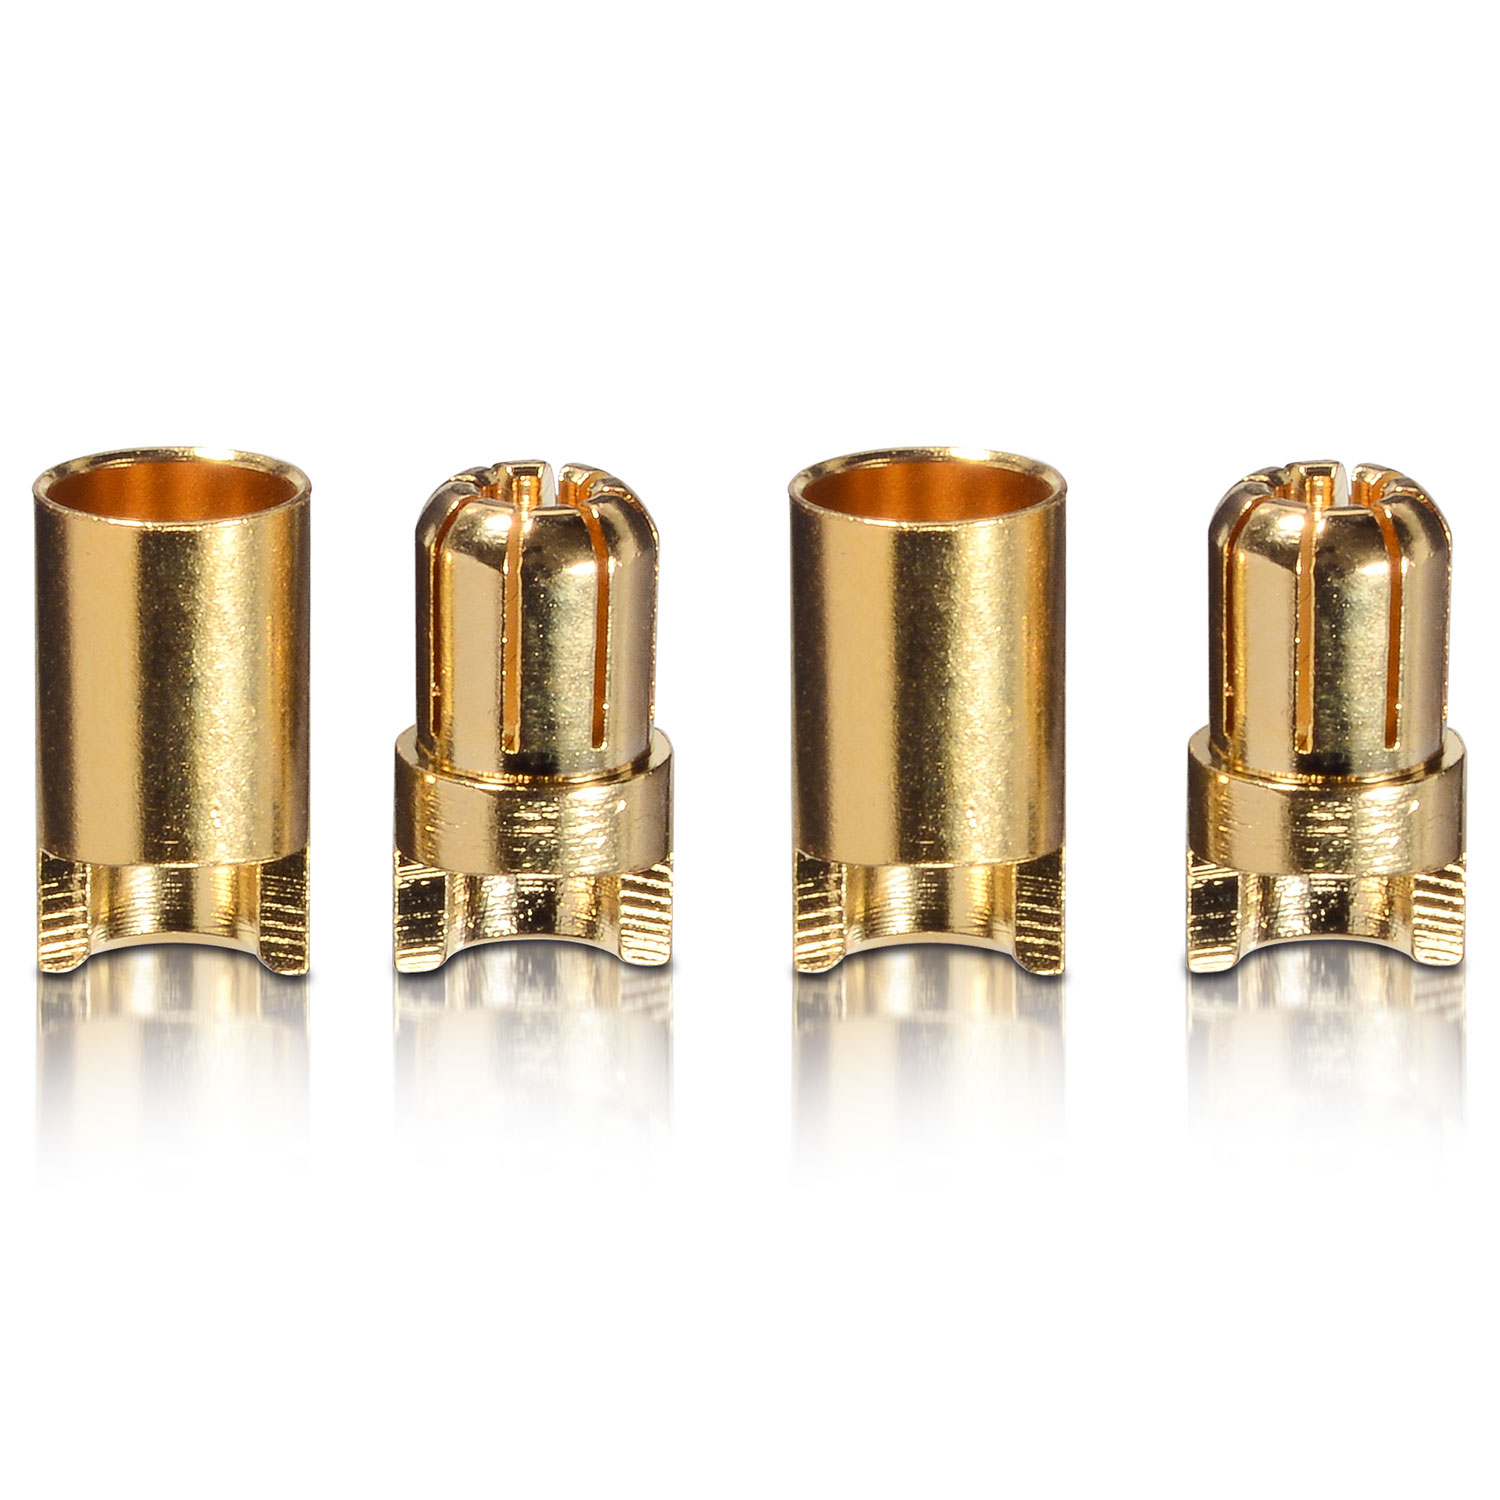 Goldkontakt Doppellamellen-Steckverbinder Stecker Buchse 6.0 mm 2 Paar partCore 